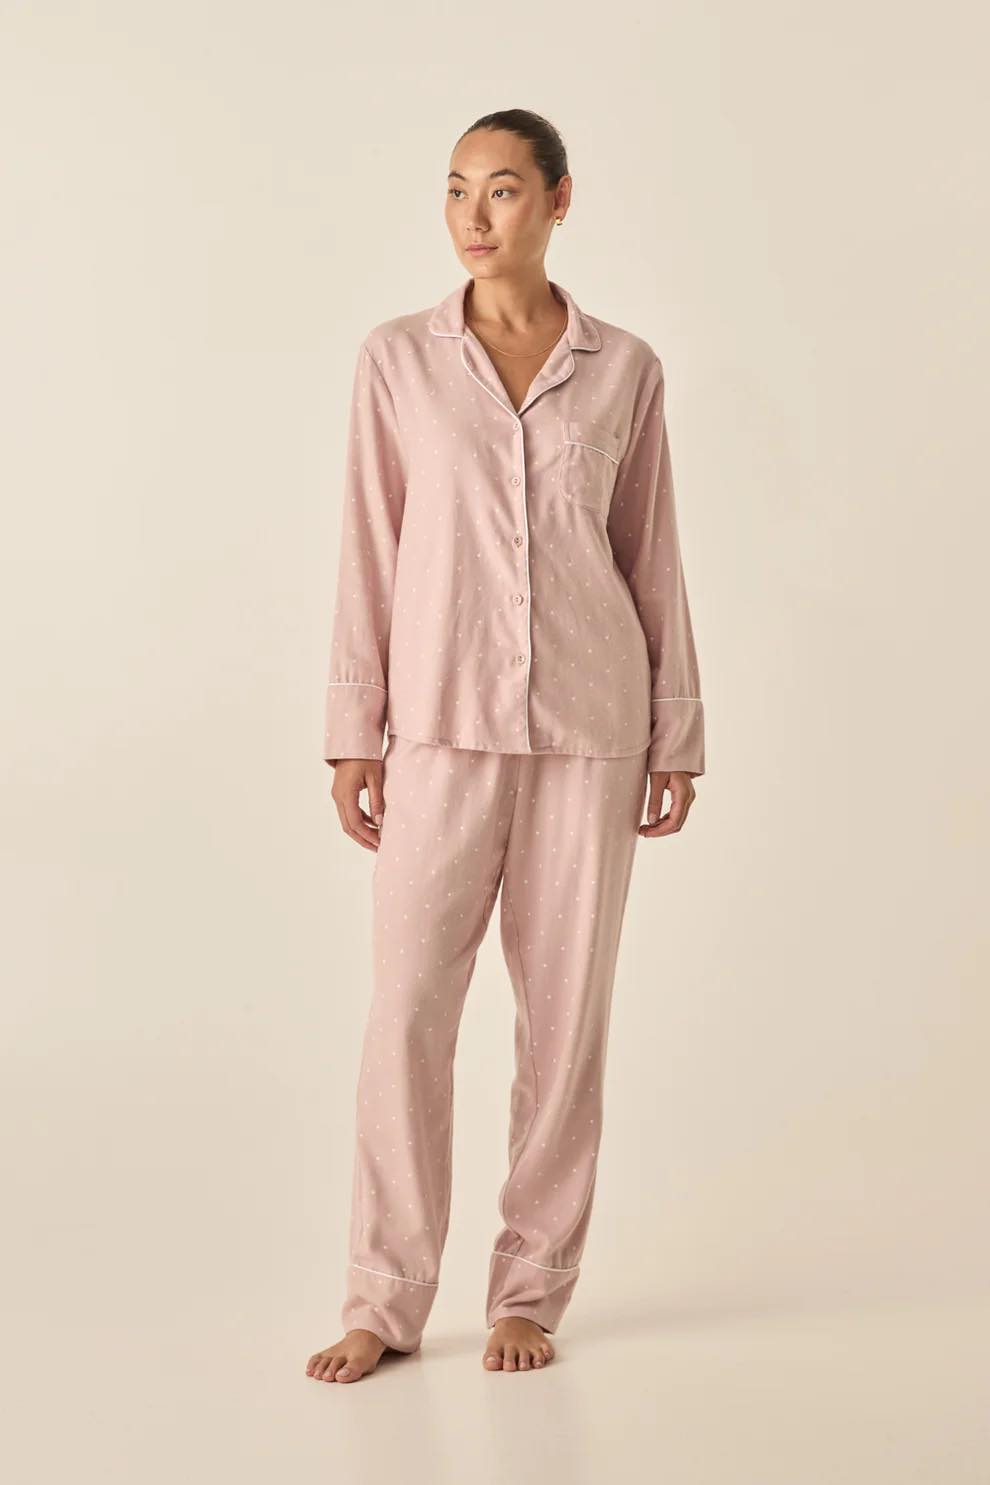 Gingerlilly Pyjamas Alessia - Pink Spot [CLR:PINK SPOT SZ:S]